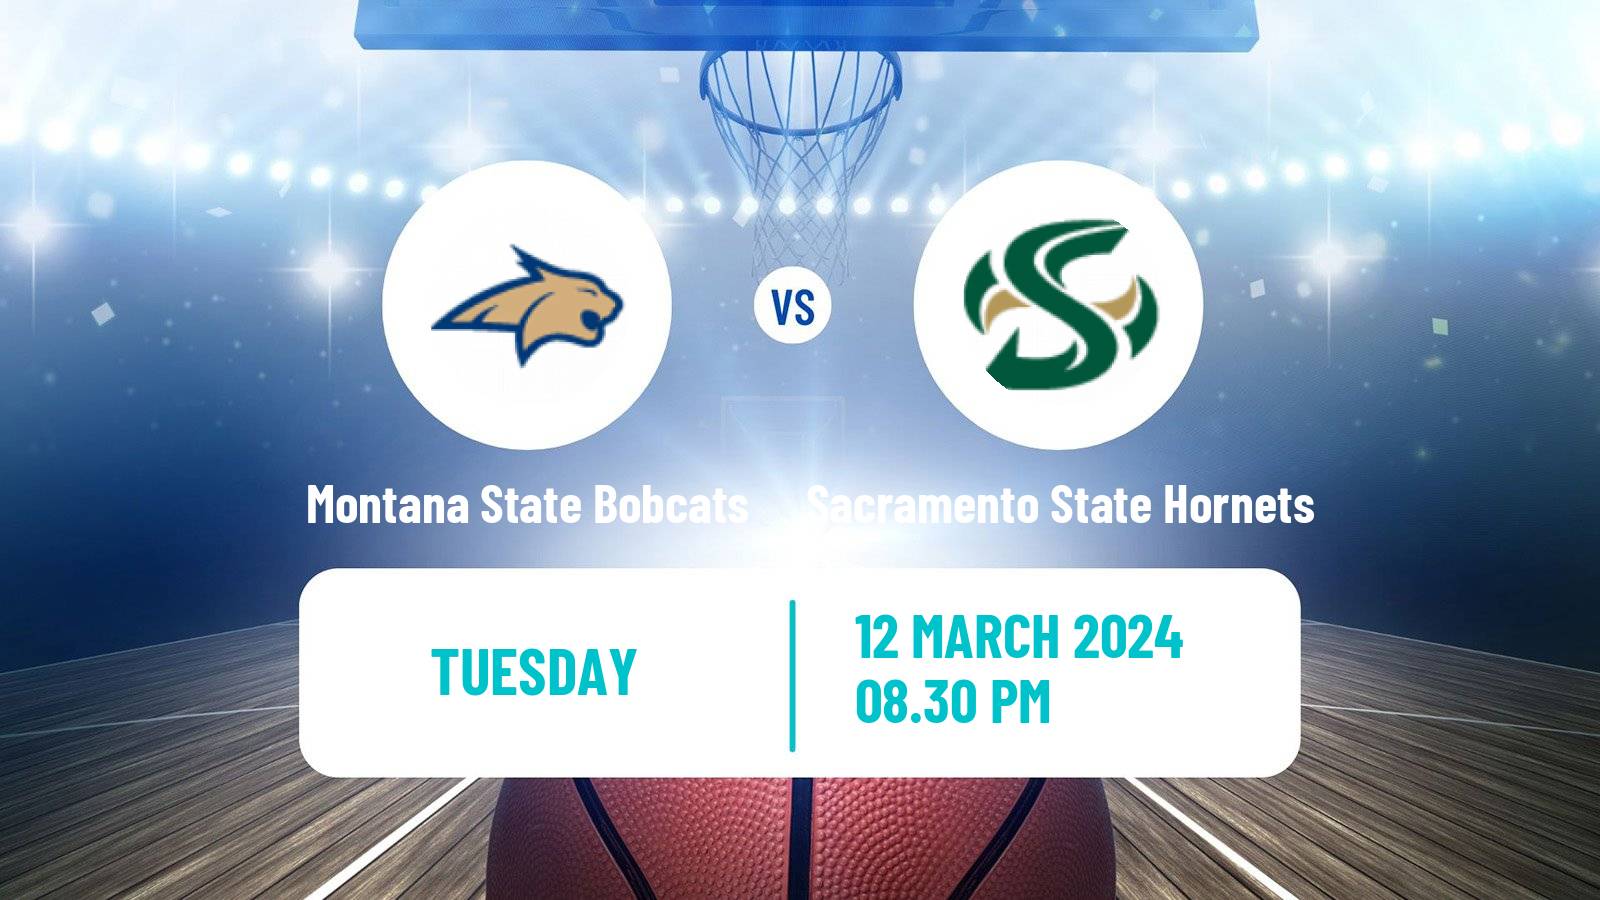 Basketball NCAA College Basketball Montana State Bobcats - Sacramento State Hornets